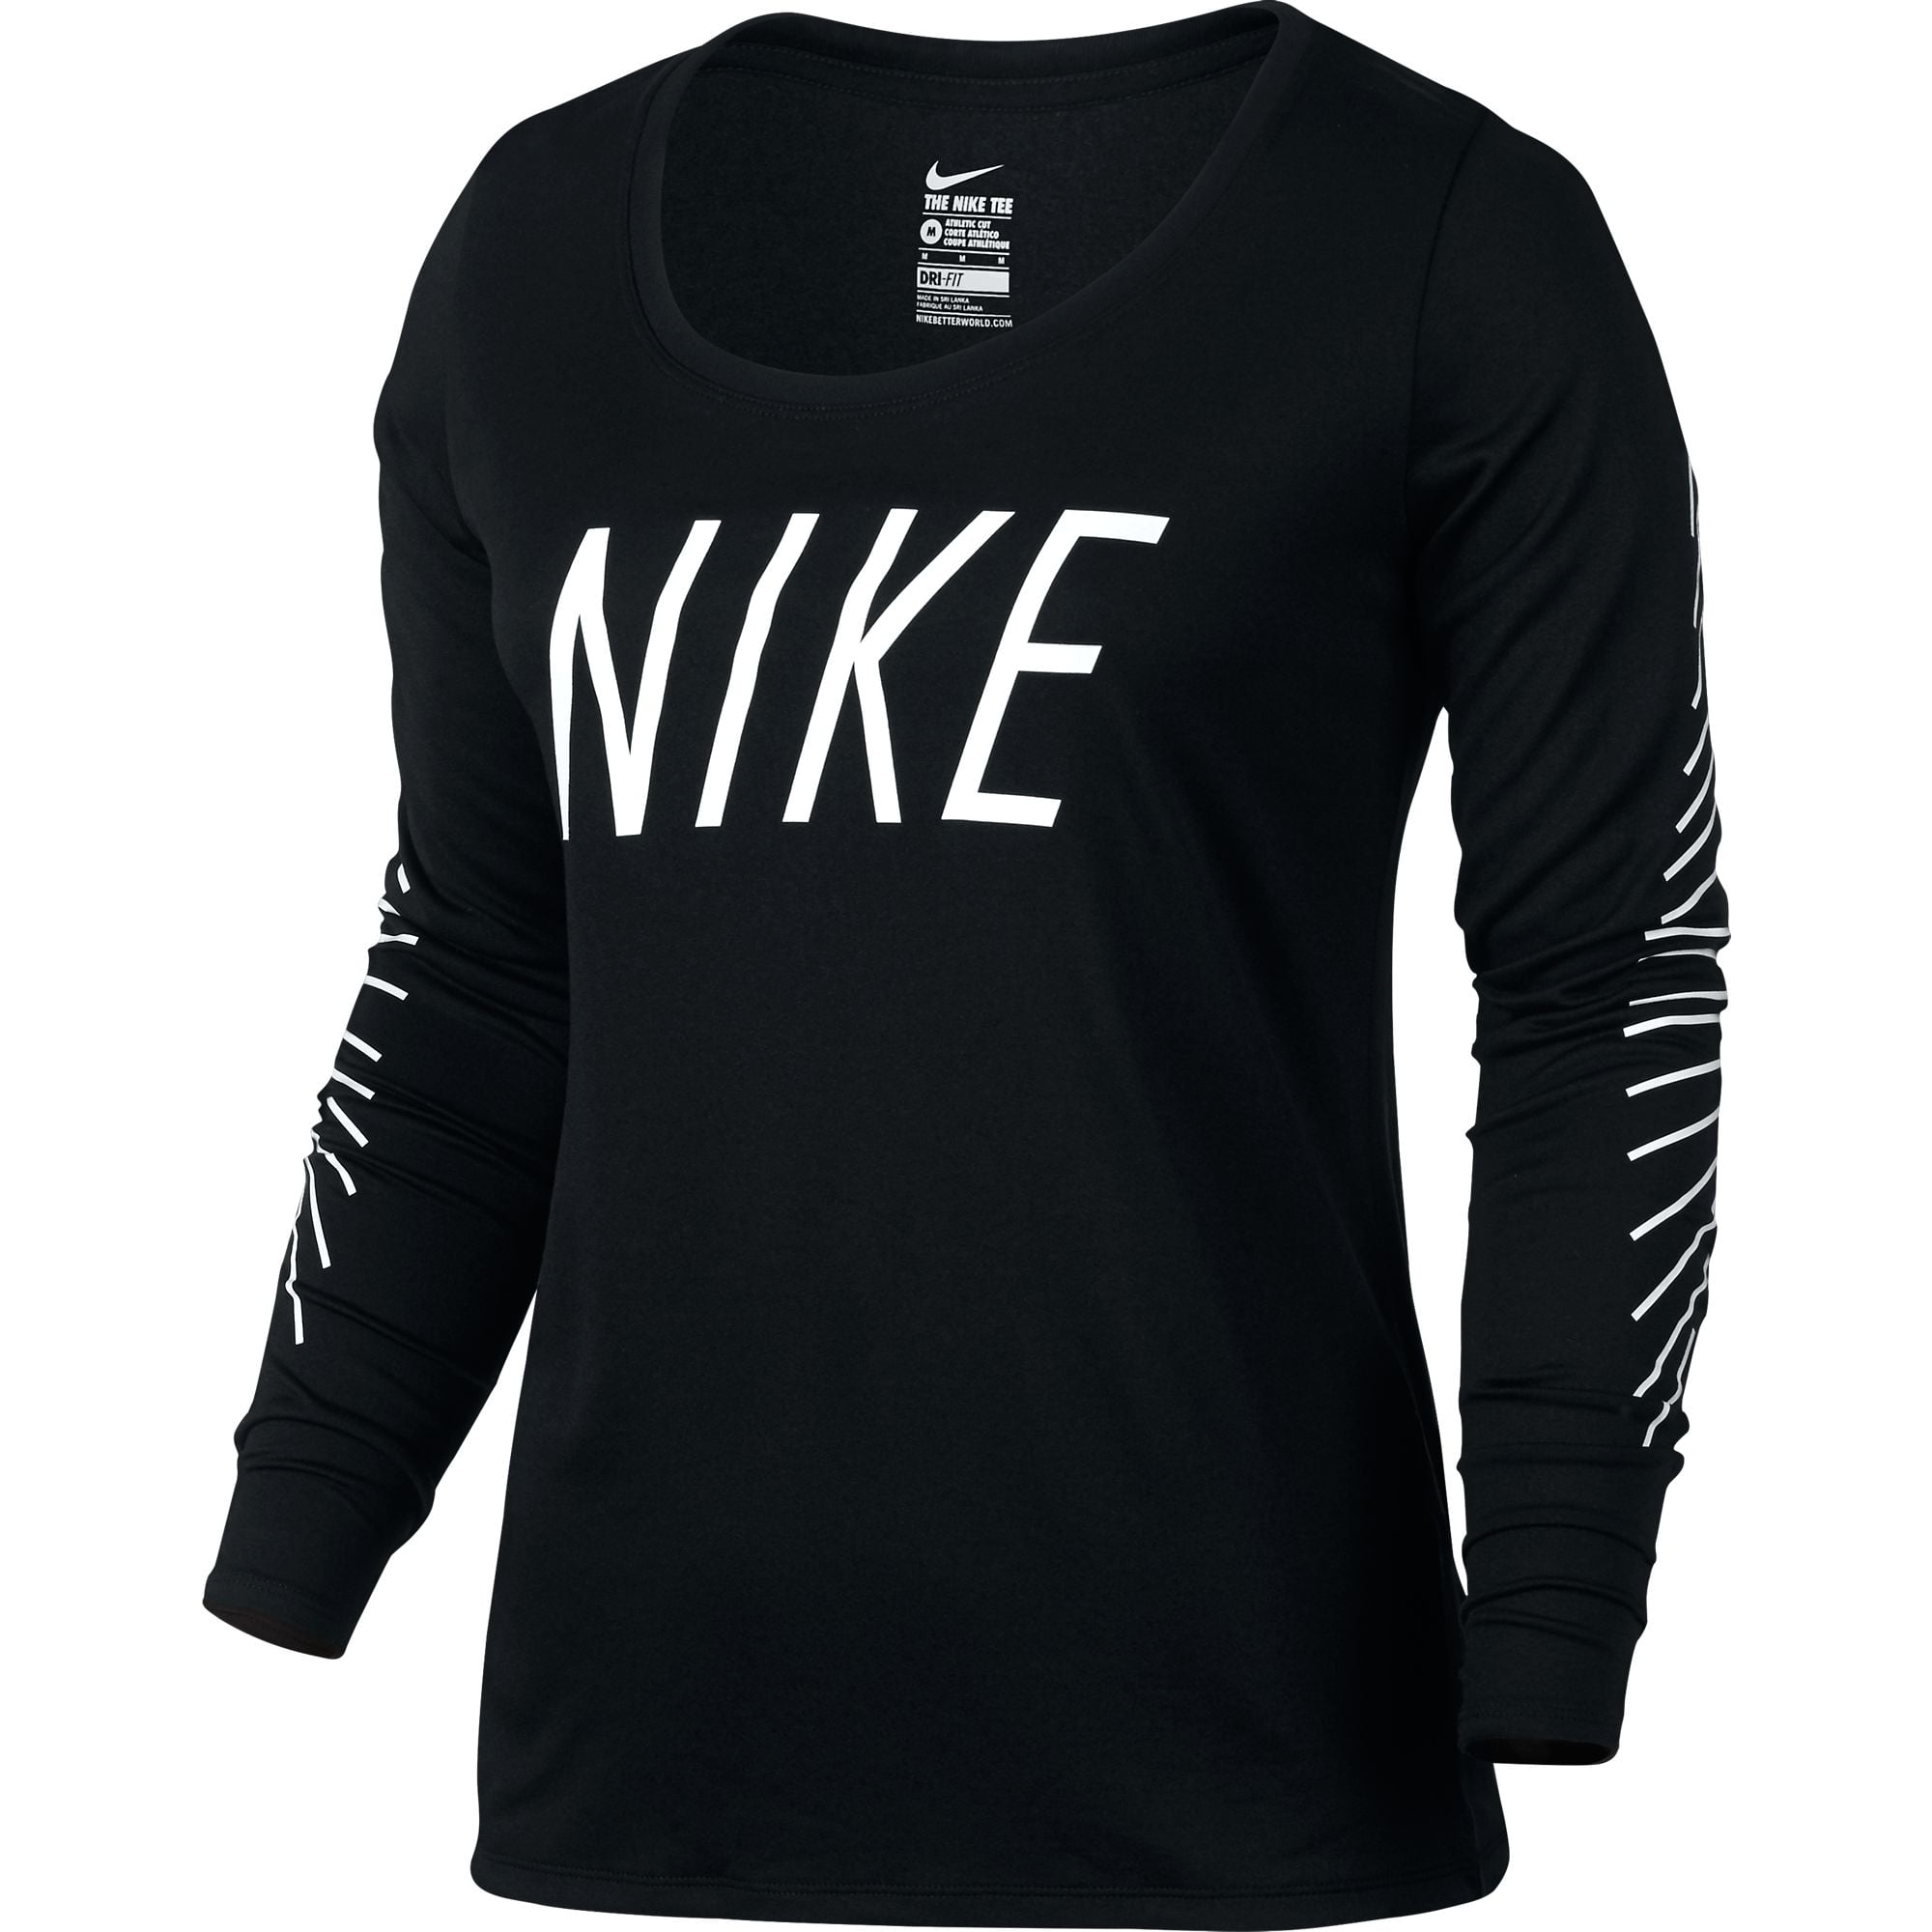 Nike Women's Legend Long Sleeve T-Shirt Black/White 805993-010 ...